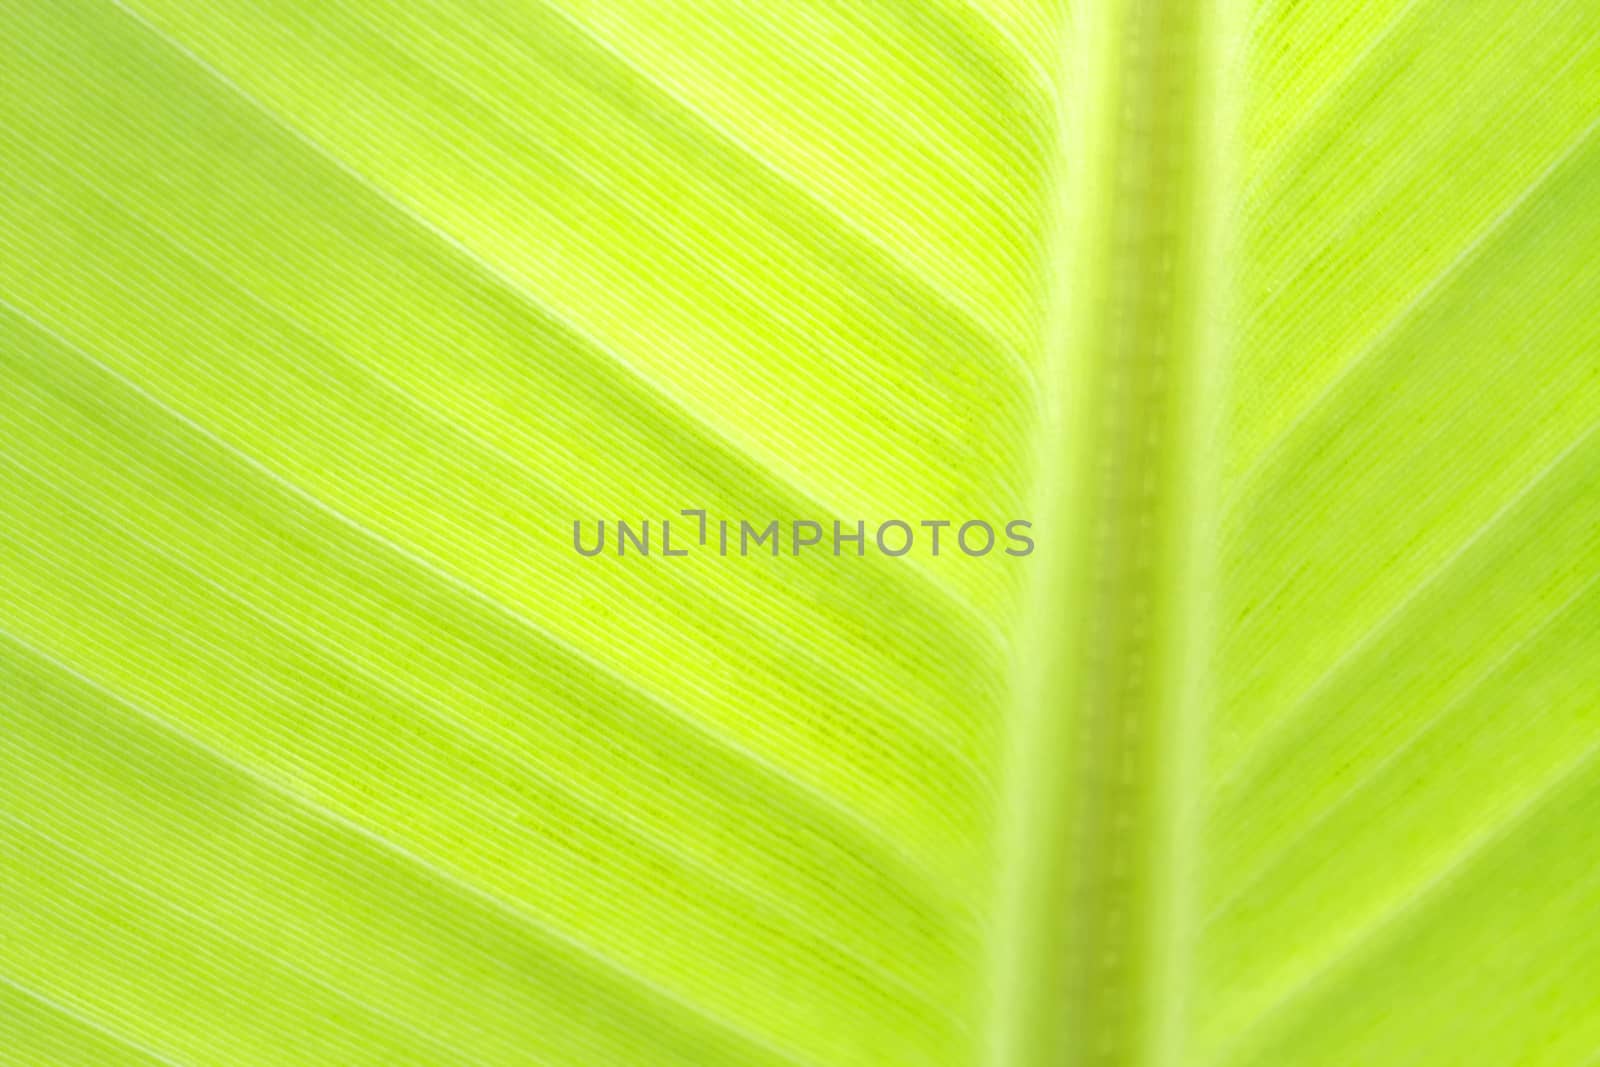 Banana leaf texture background of backlight fresh green .